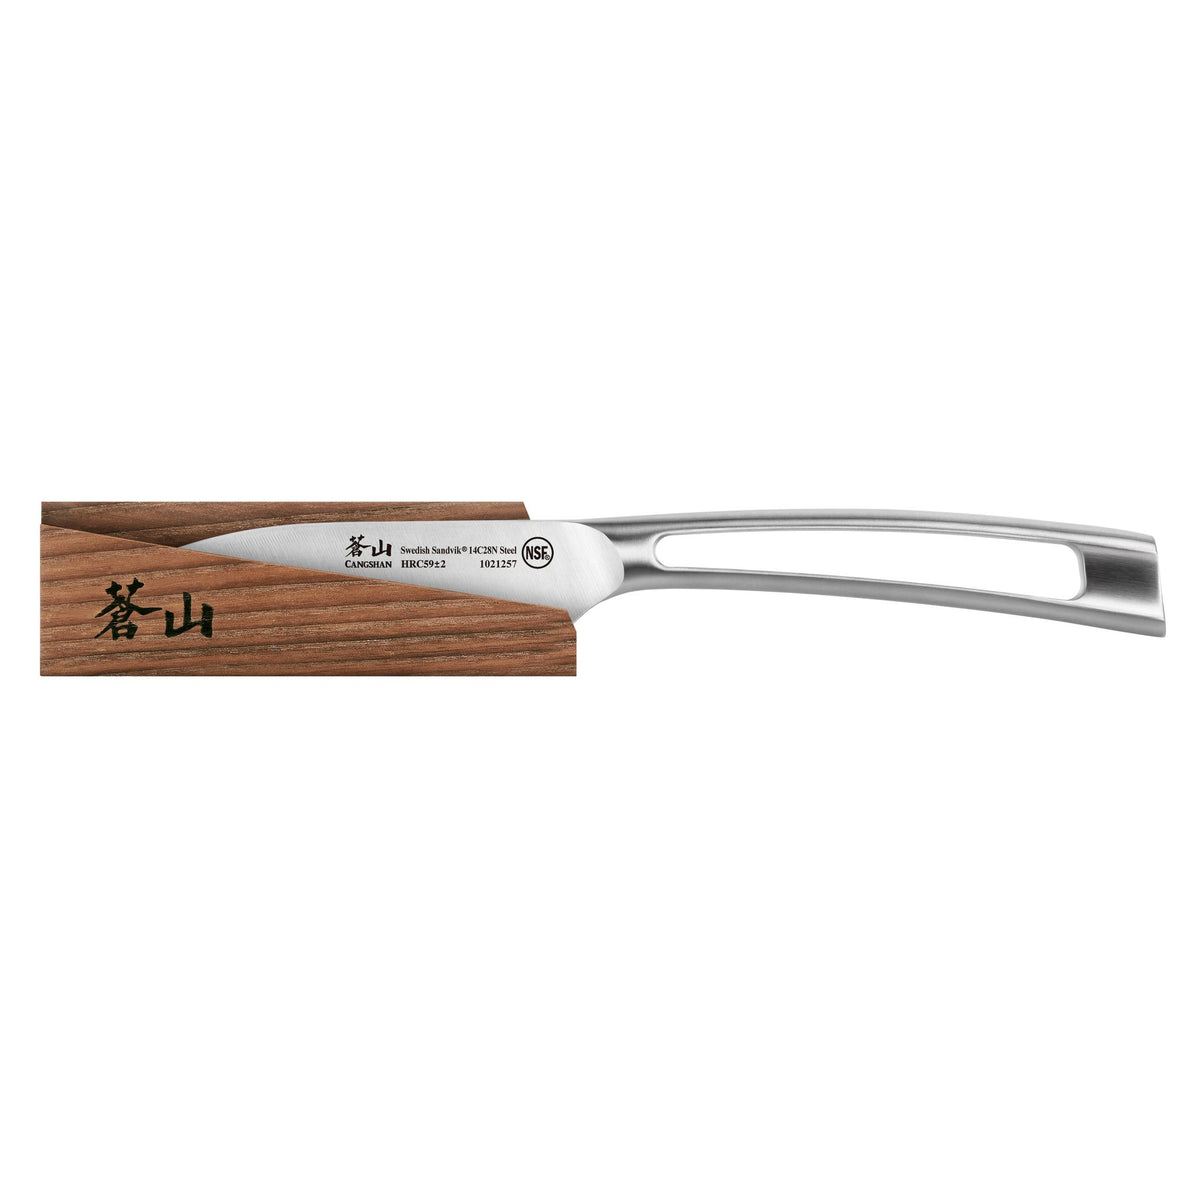 TN1 Cutlery Forged Sheath, Wood Series 14C2 with Knife Company 3.5-Inch Swedish Paring Cangshan –